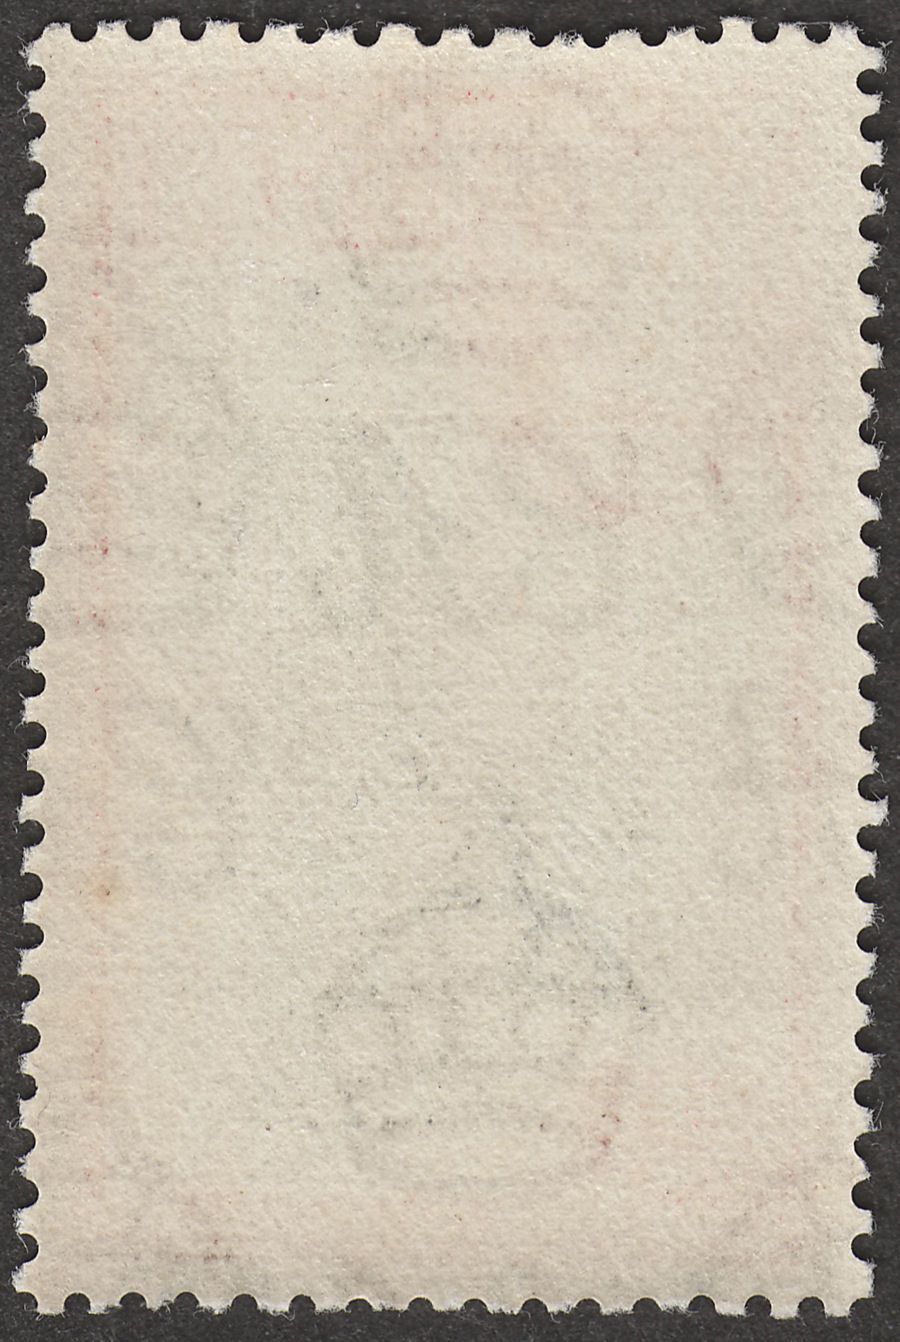 Ceylon 1938 KGVI 2c Black and Carmine perf 11½x13 Mint SG386